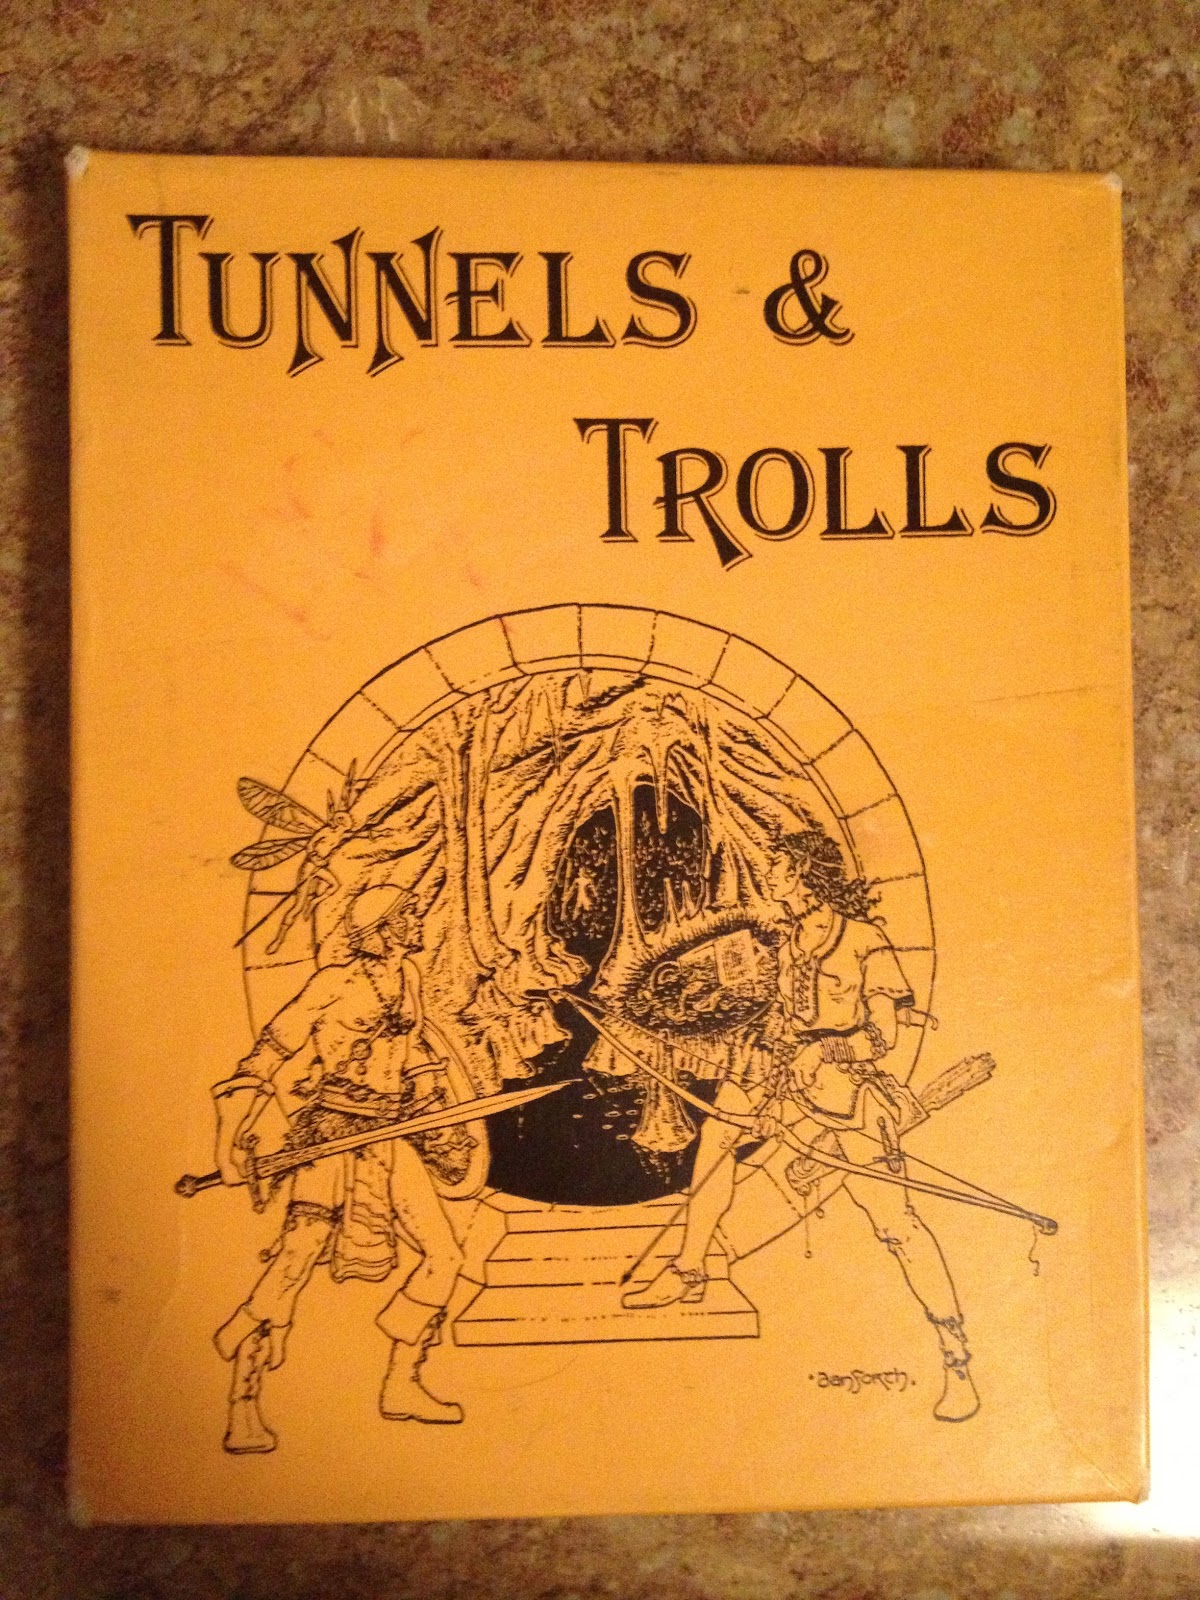 trolls and tunnels pdf merge